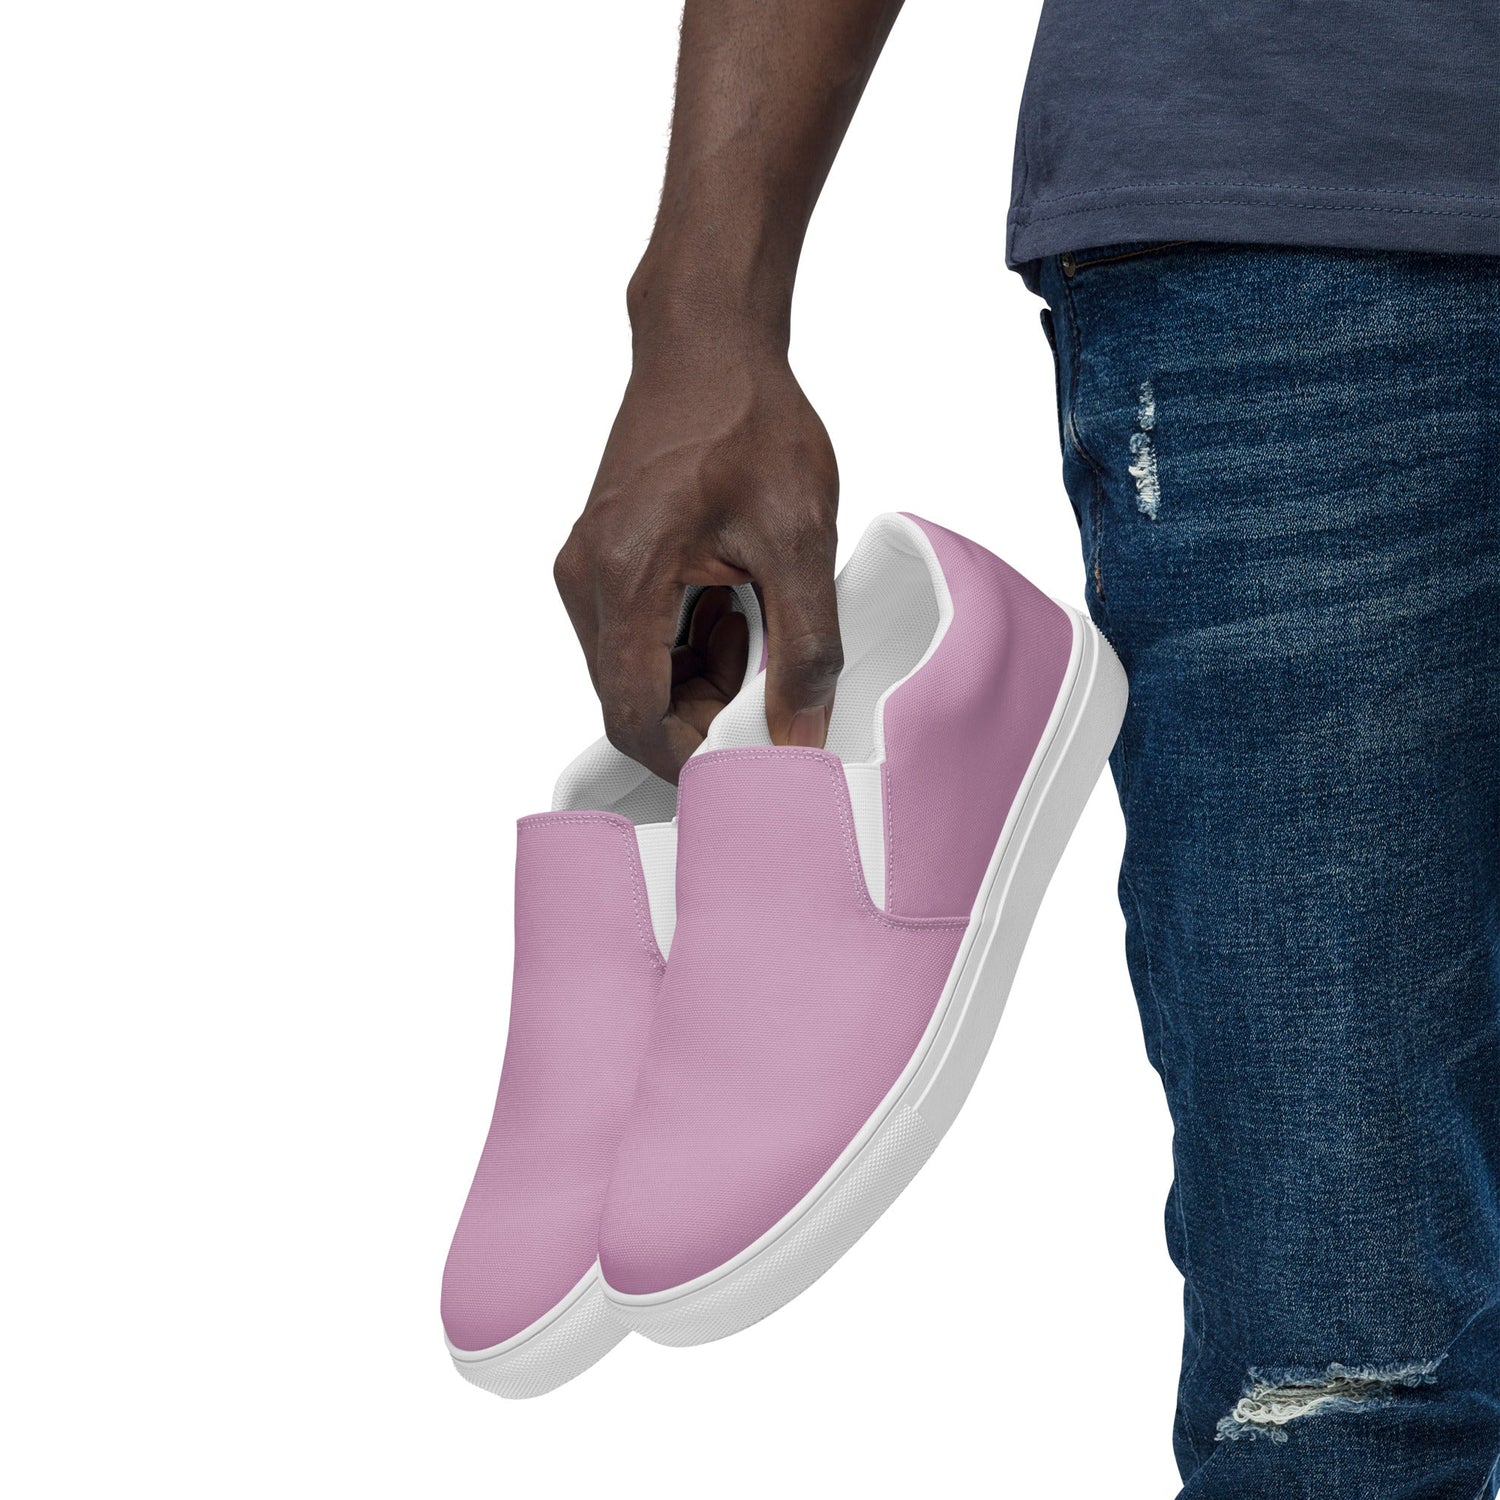 klasneakers Men’s slip-on canvas shoes - Faded Bubblegum